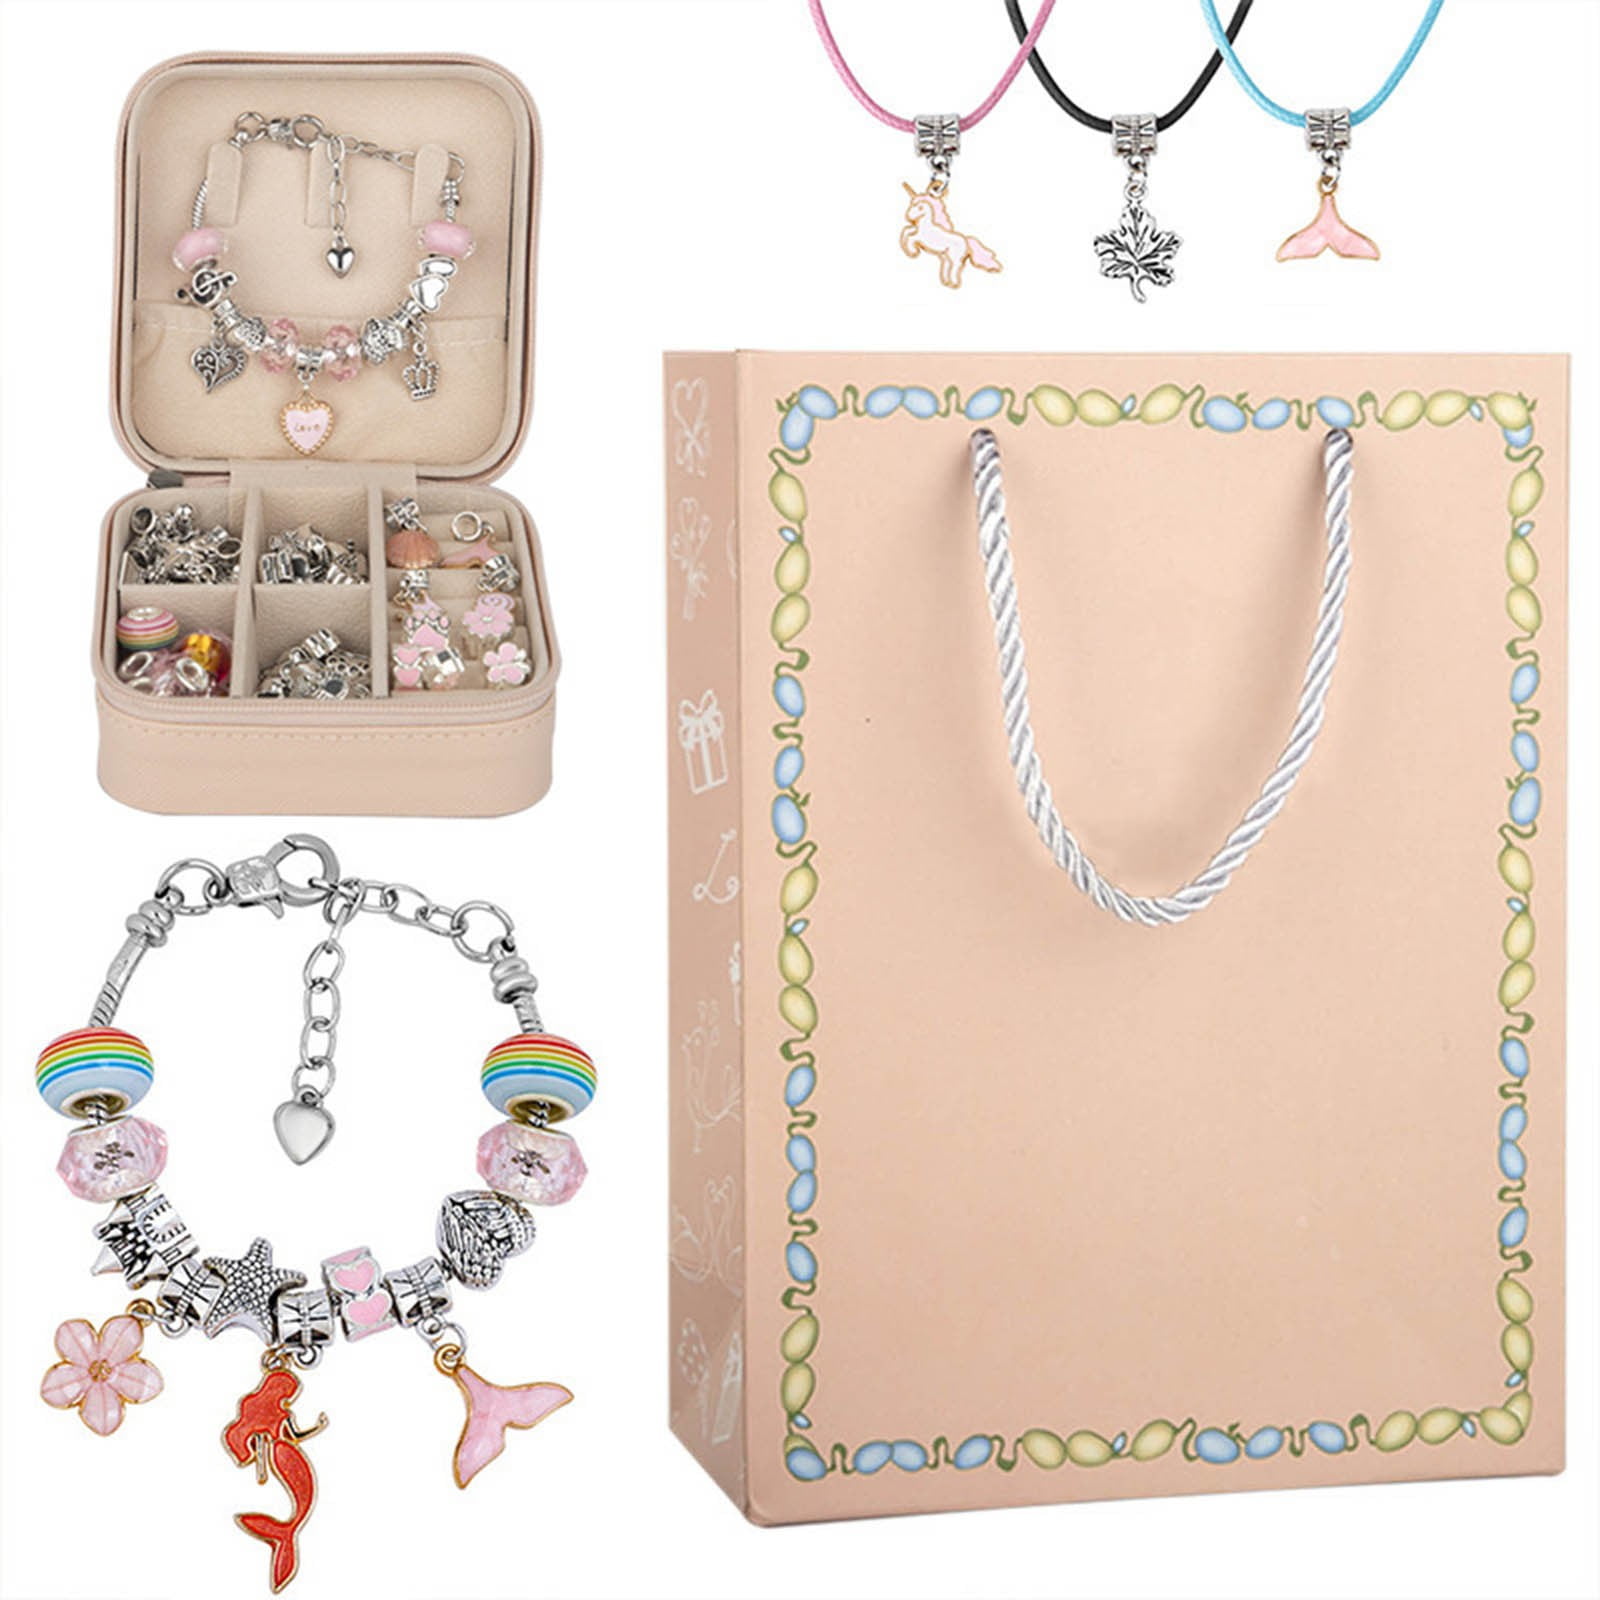  atcryih Charm Bracelet Making Kit, 66 Pcs Charm Bracelet Making  Kit Jewelry Making Supplies, Gift Boxed Charm Bracelet Girl DIY Craft Gift  Kit for Teen Girls Crafts for Girls Ages 5-12 (